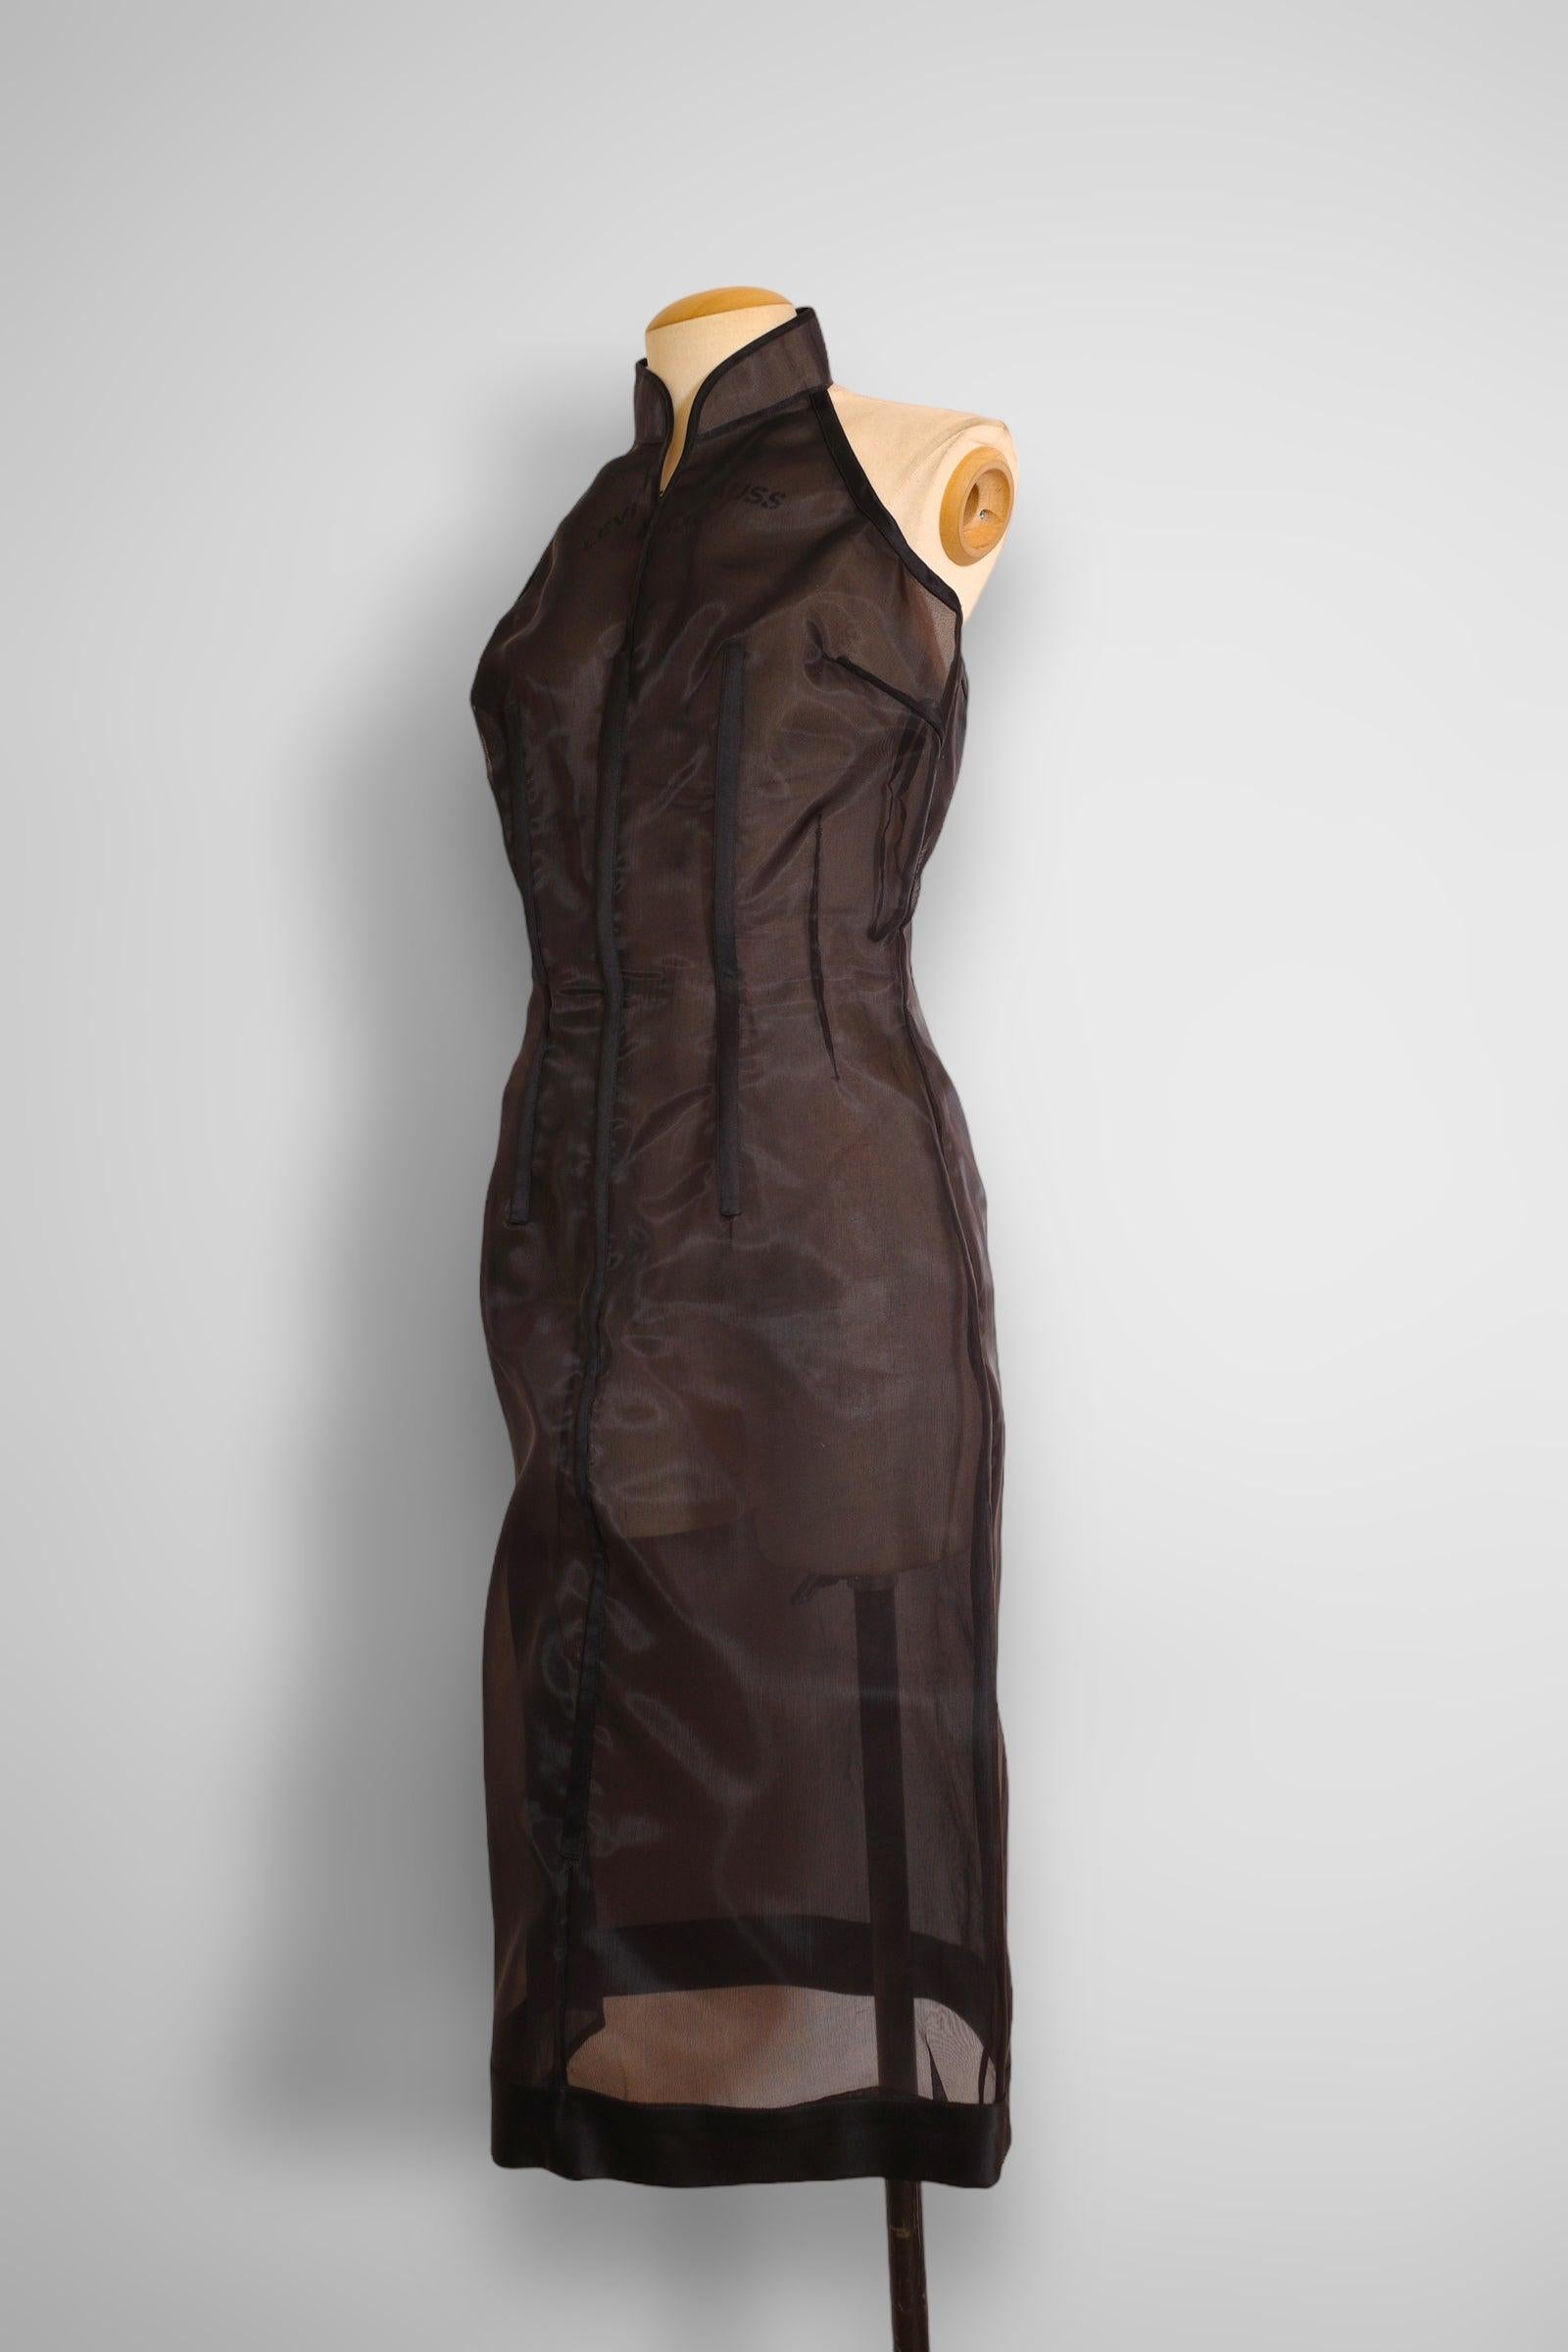 Prada 1995ss final look boned dress For Sale 2